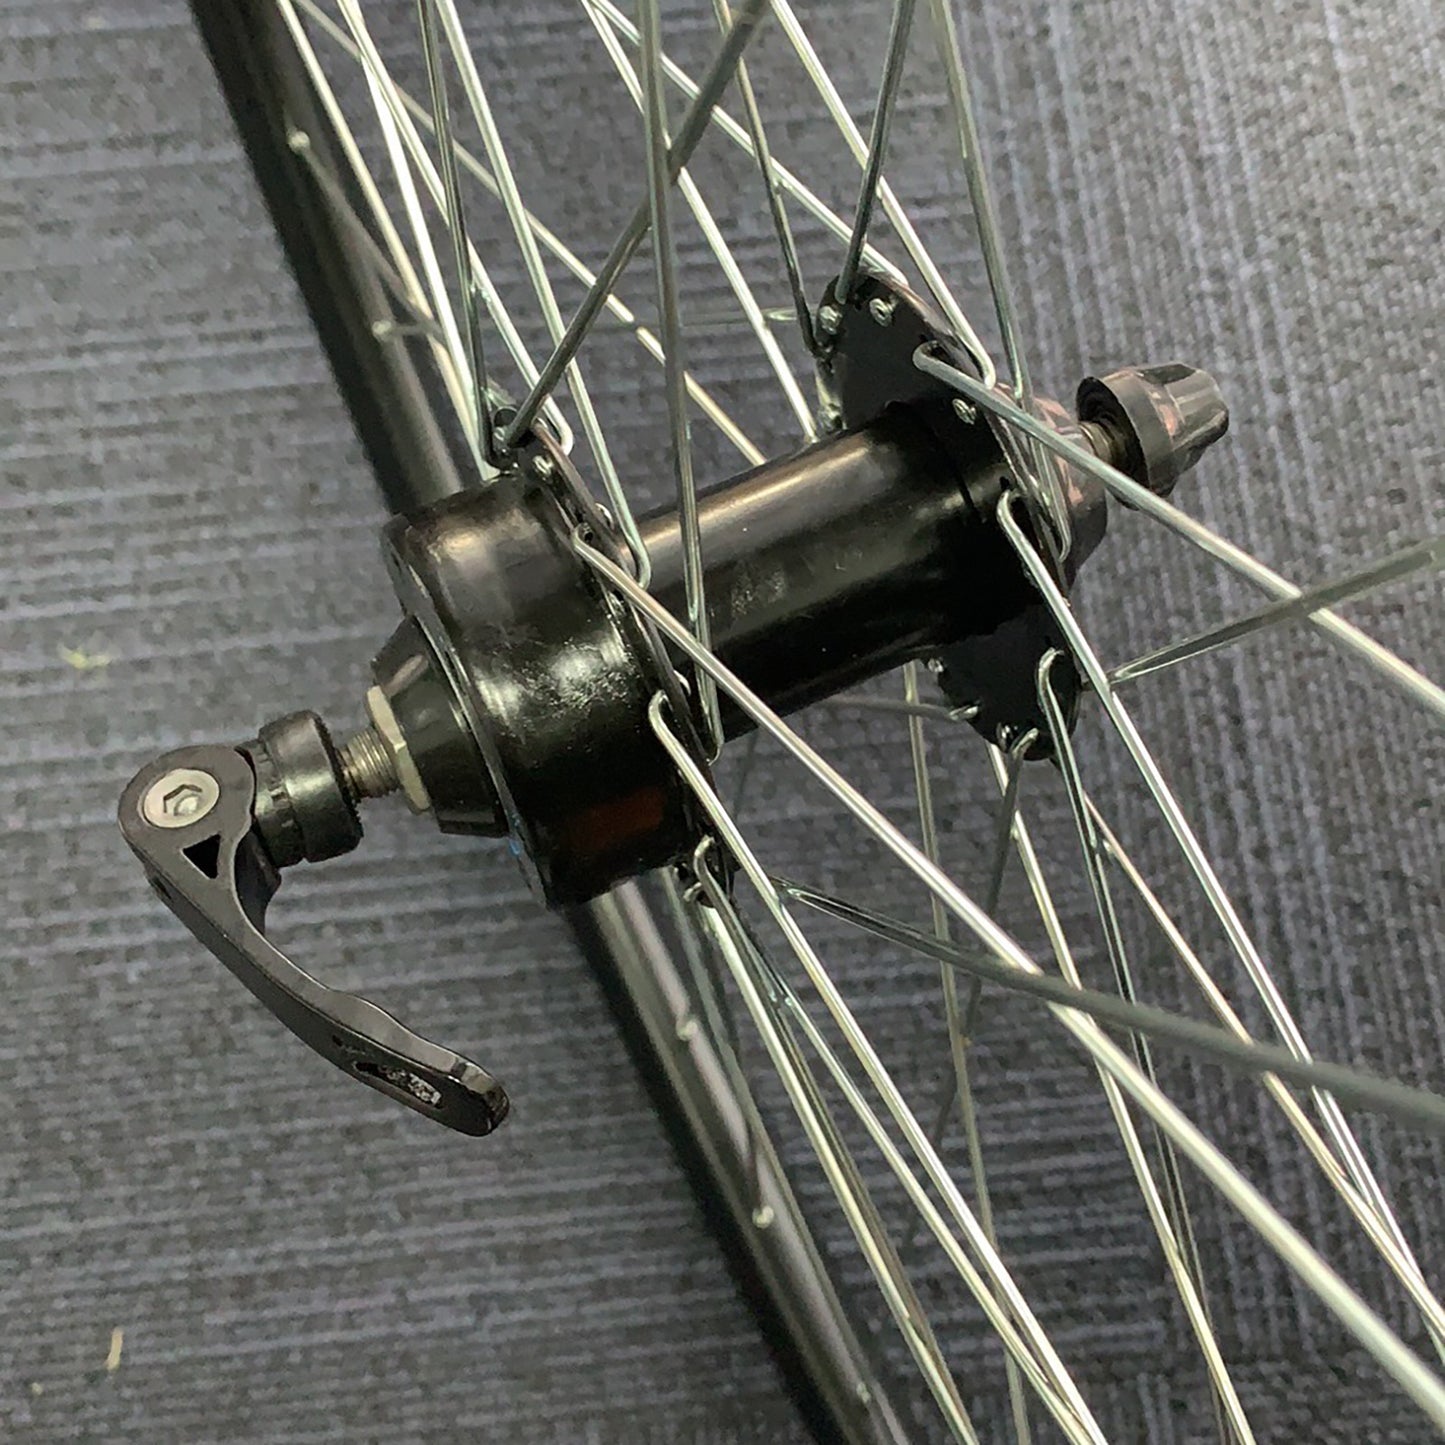 26" Inch Bike Bicycle Front/Rear quick release Wheel Rim for Mountain Bike MTB Push Bike